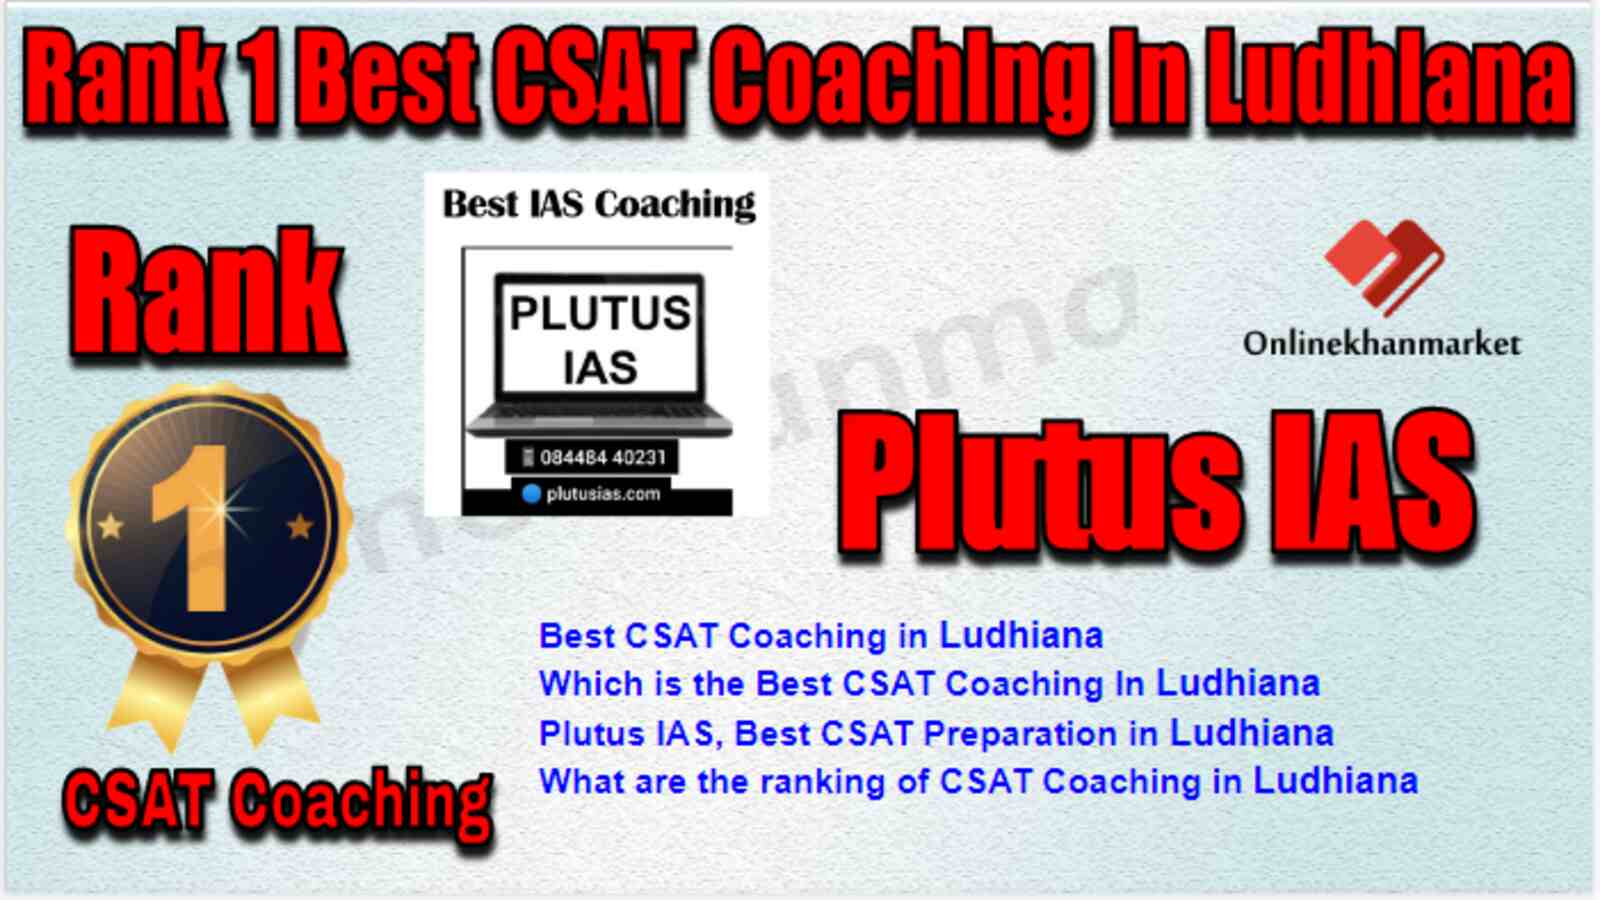 Rank 1 Best CSAT Coaching in Ludhiana